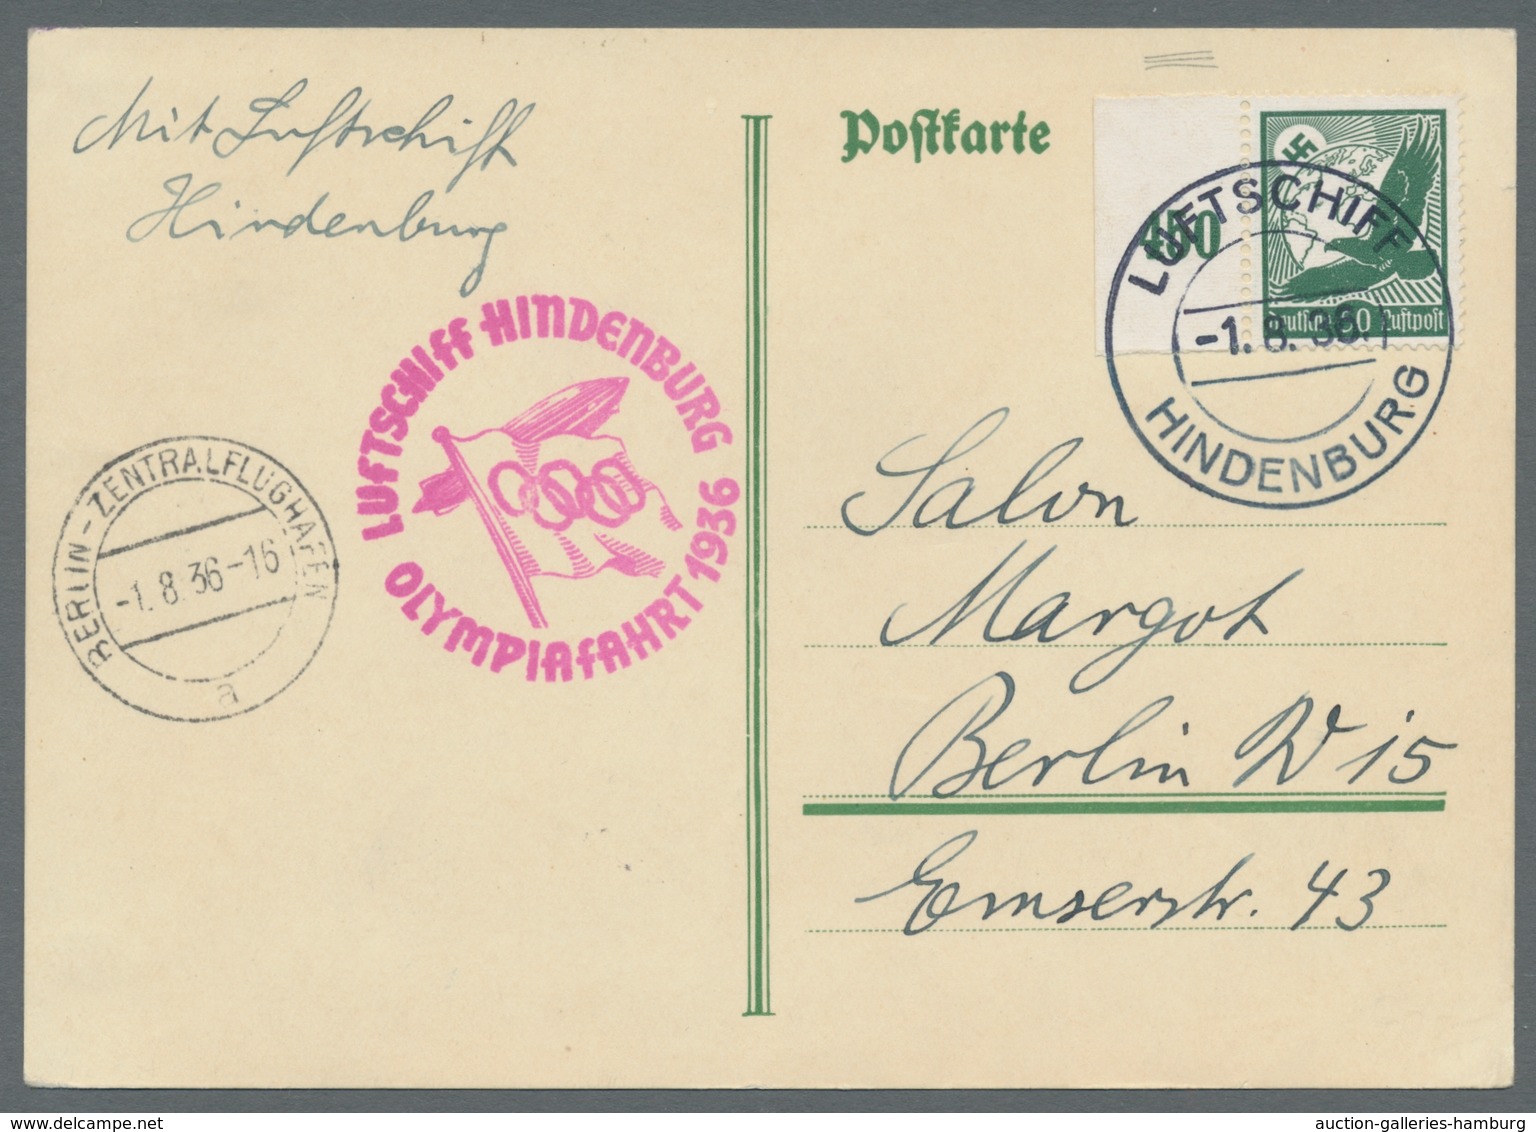 Zeppelinpost Deutschland: 1926, Olympiade-Fahrt, Flugpost 50 Pf. Grün, Randstück, Ef. Auf Postkarte - Correo Aéreo & Zeppelin